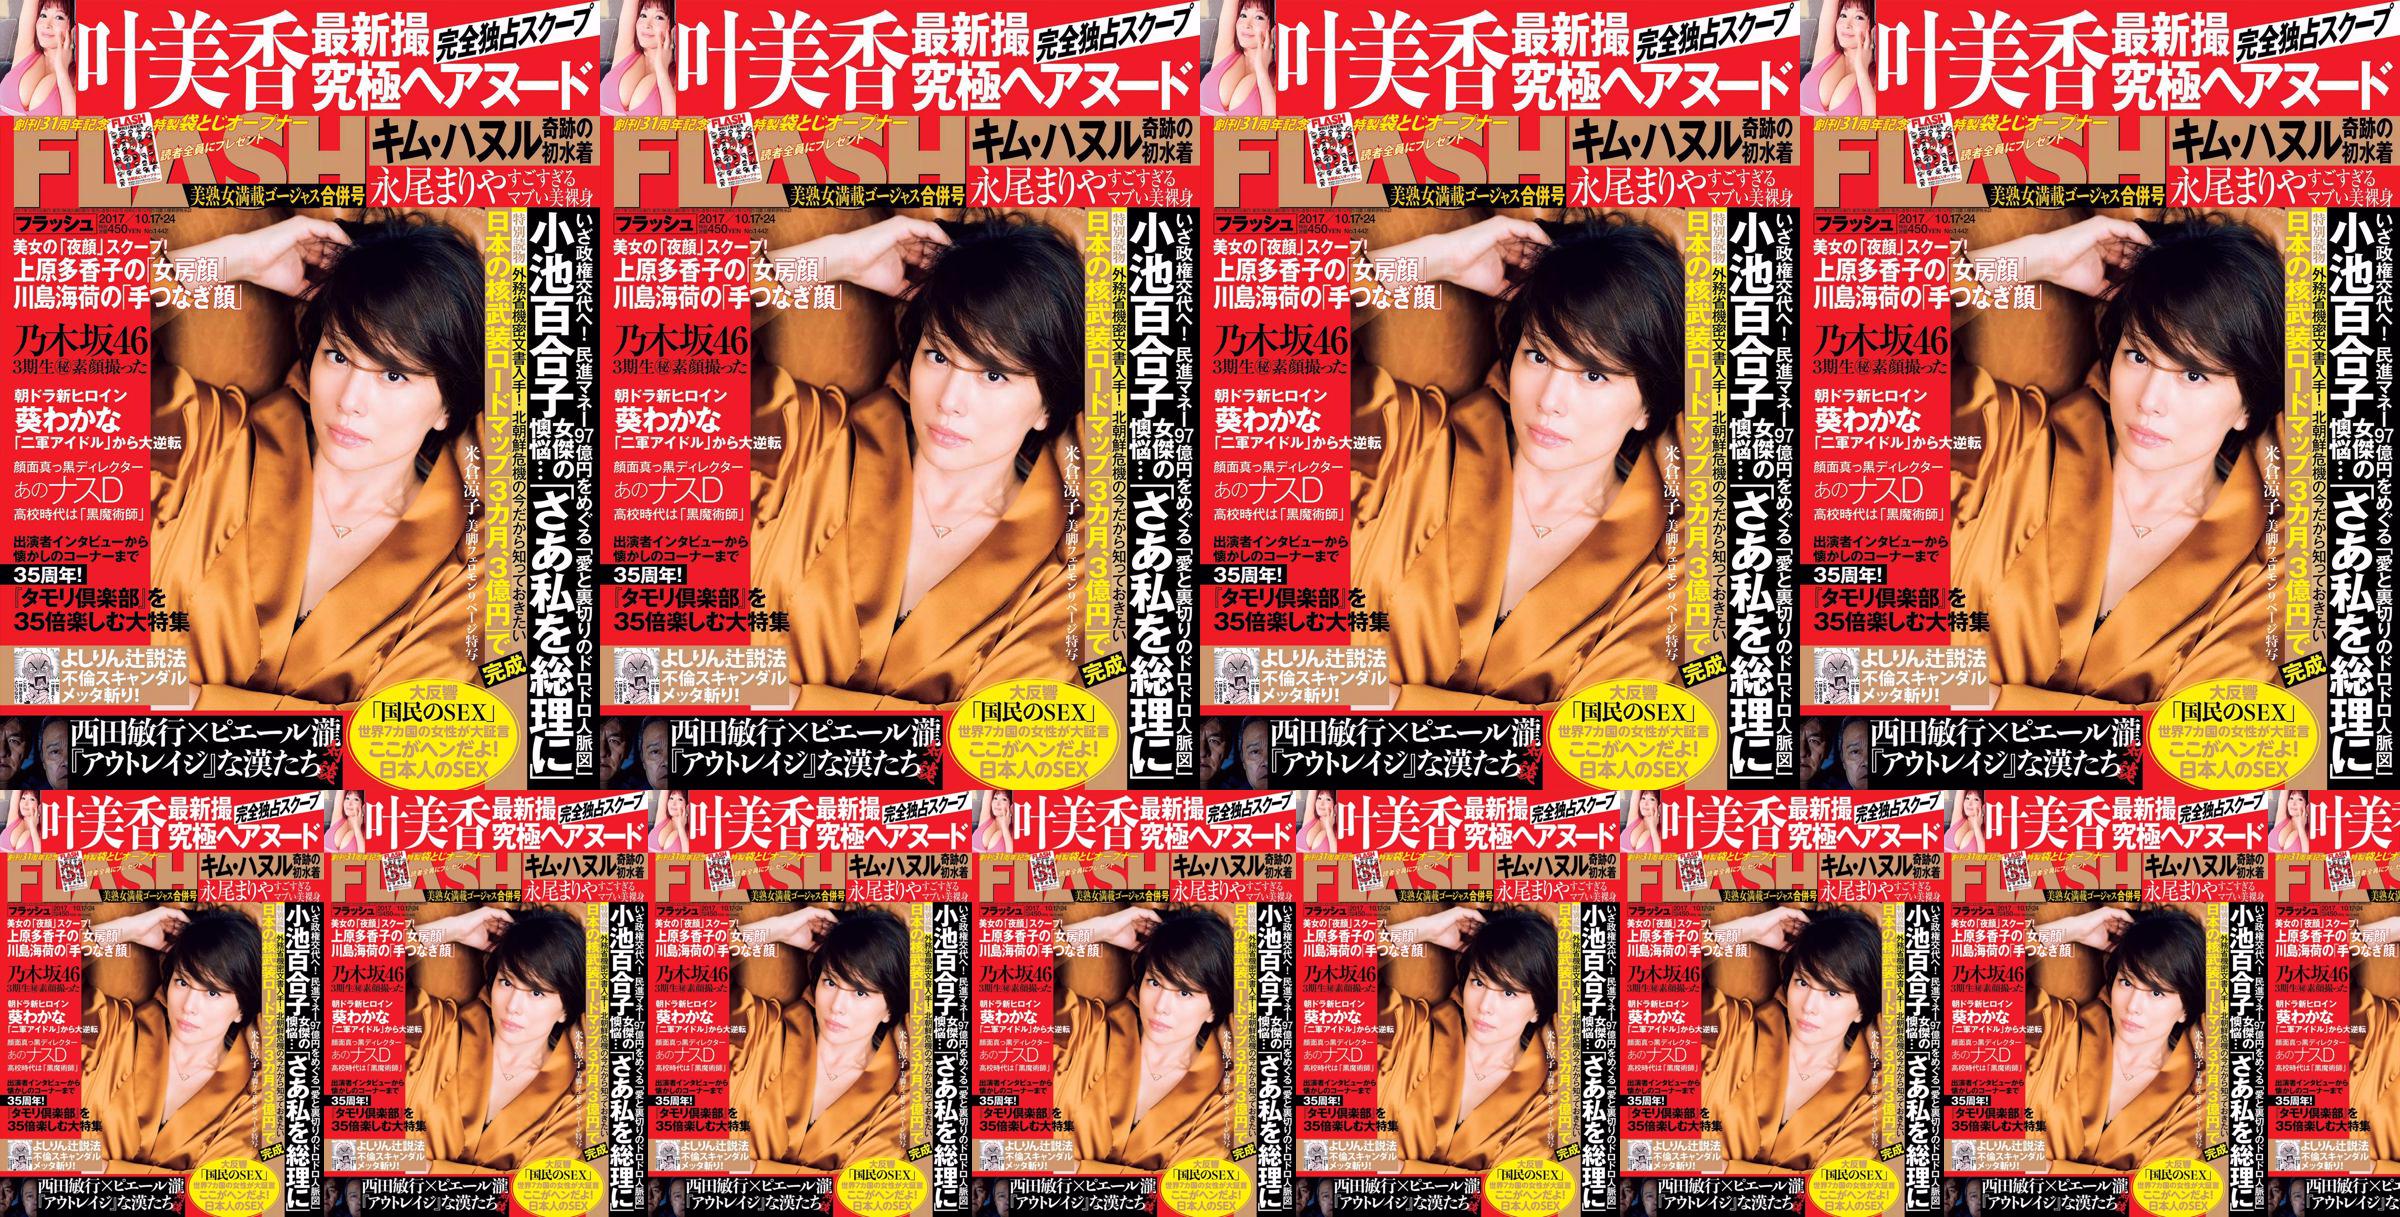 [FLASH] Yonekura Ryoko Ye Meixiang Tachibana Flower Rin Nagao Rika 2017.10.17-24 Photo Magazine No.4f985a Page 3